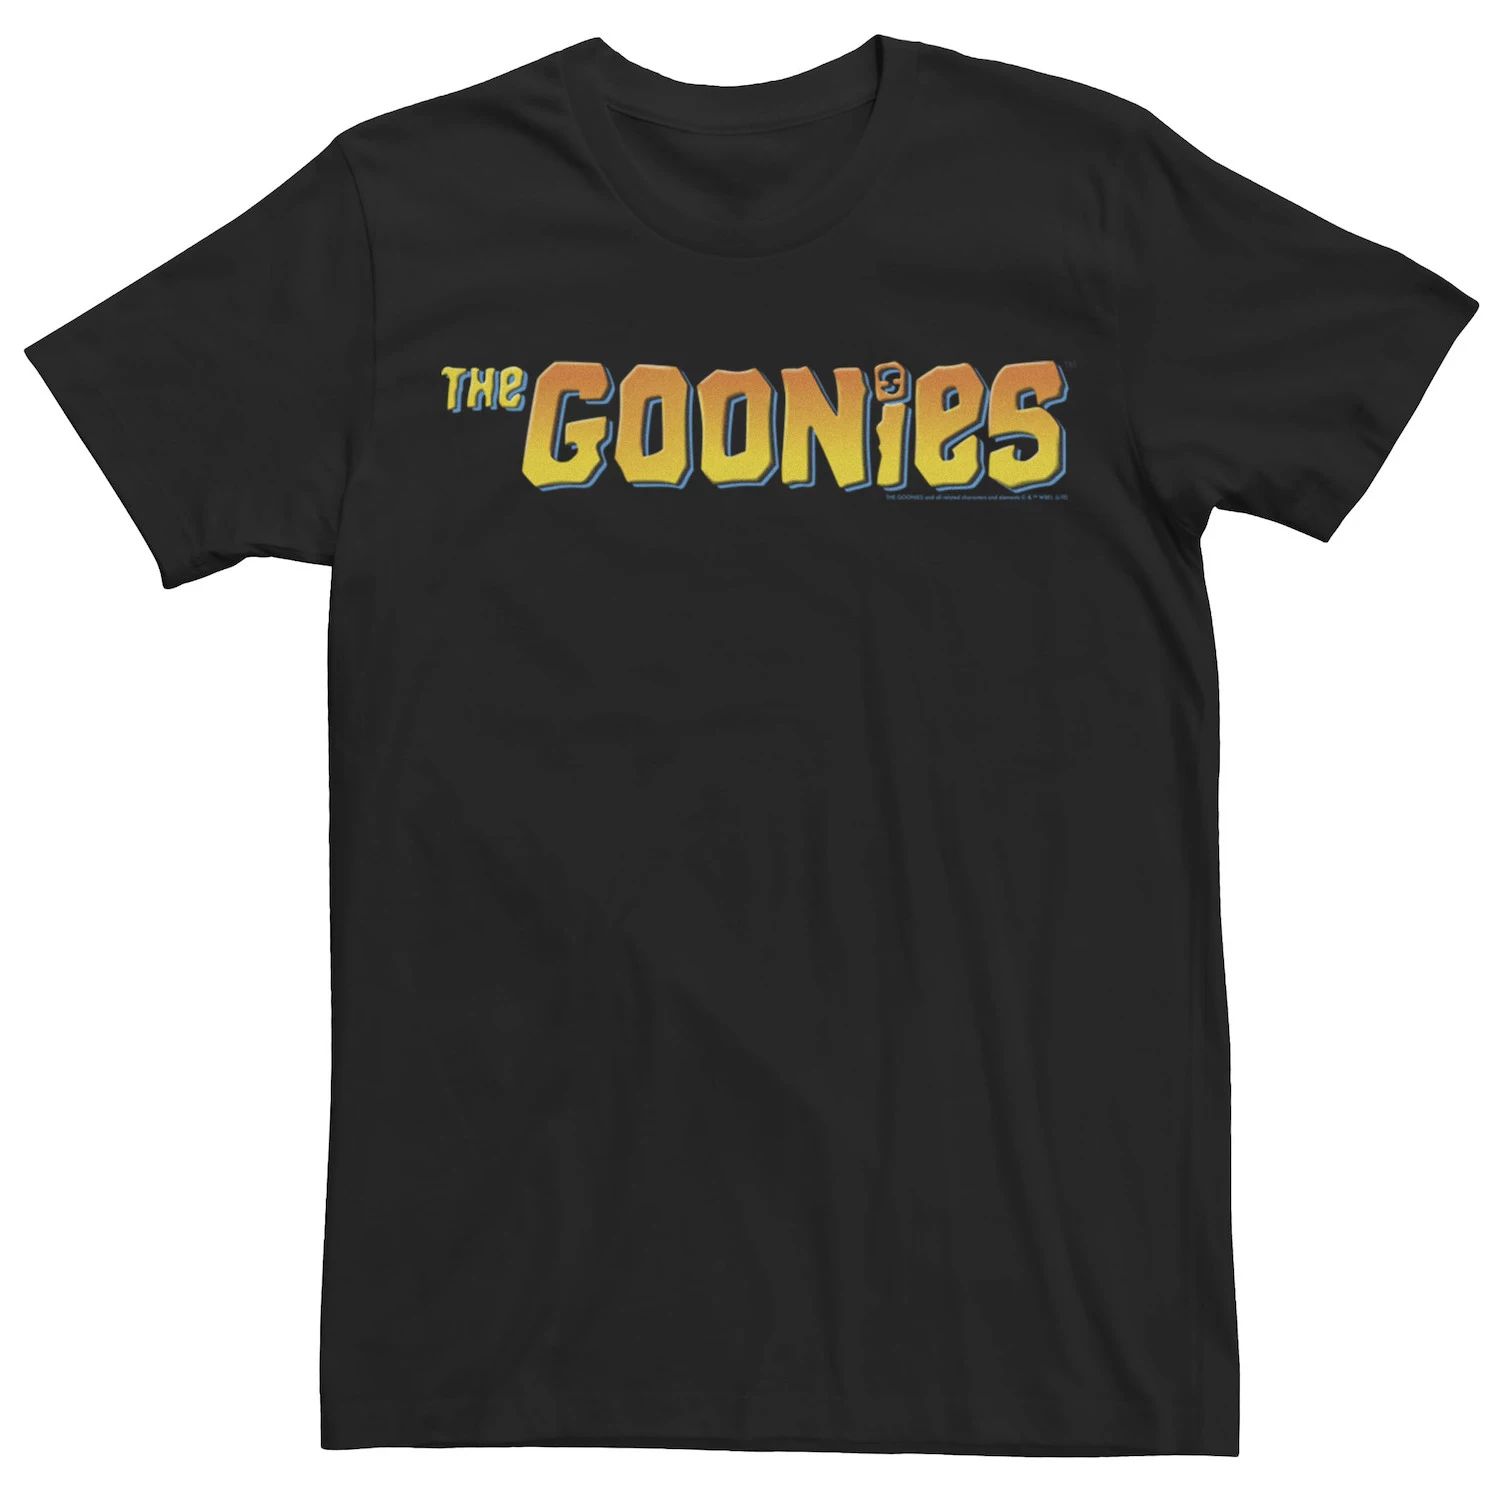 Мужская футболка с простым логотипом The Goonies Licensed Character